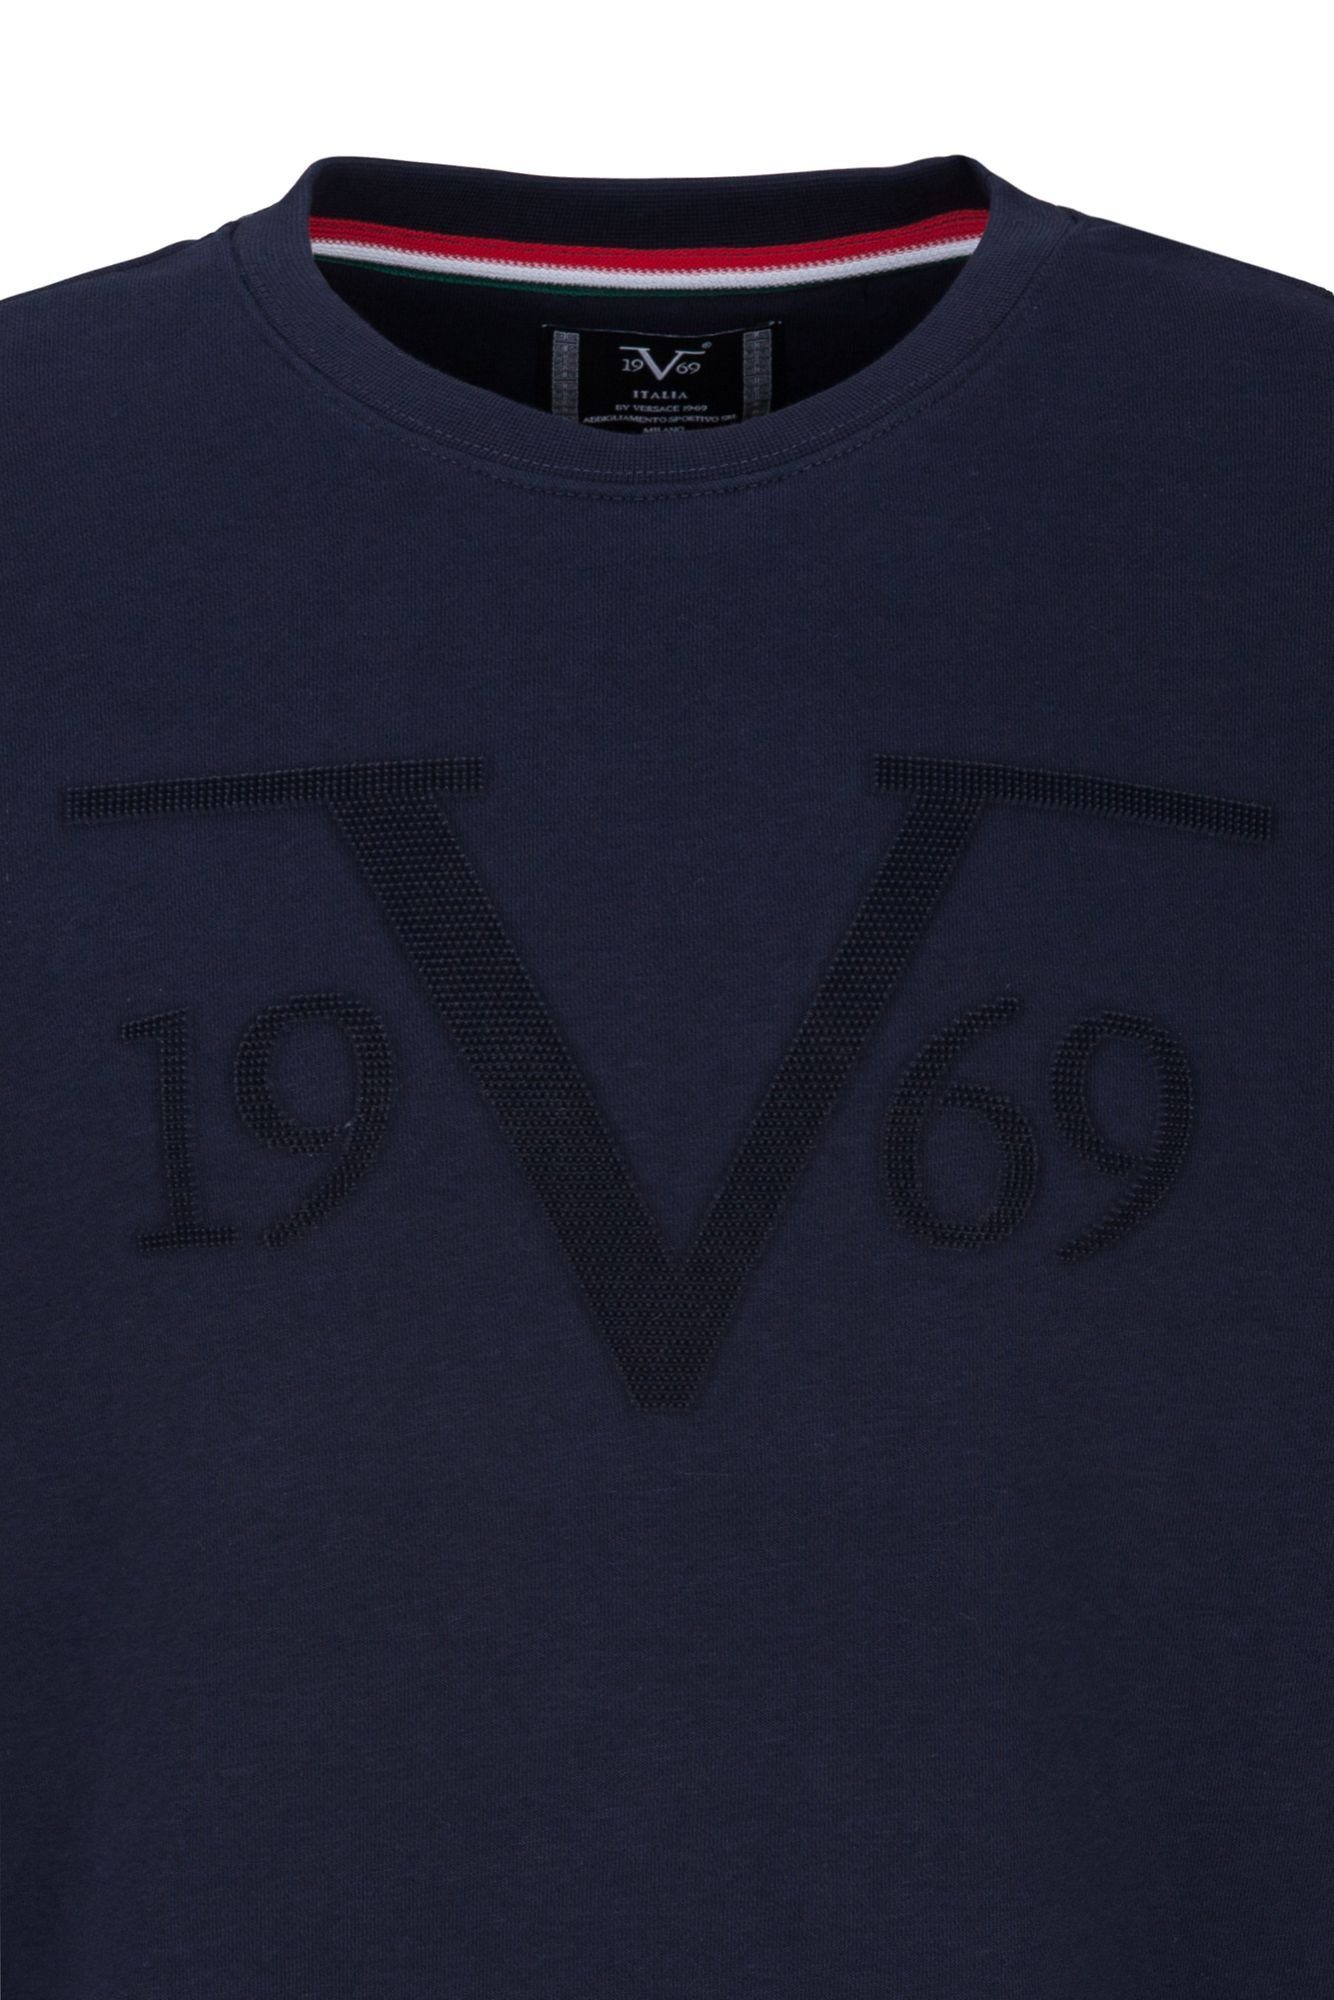 by Italia Sportivo SRL Giorgio - Versace Sweatshirt Versace 19V69 by